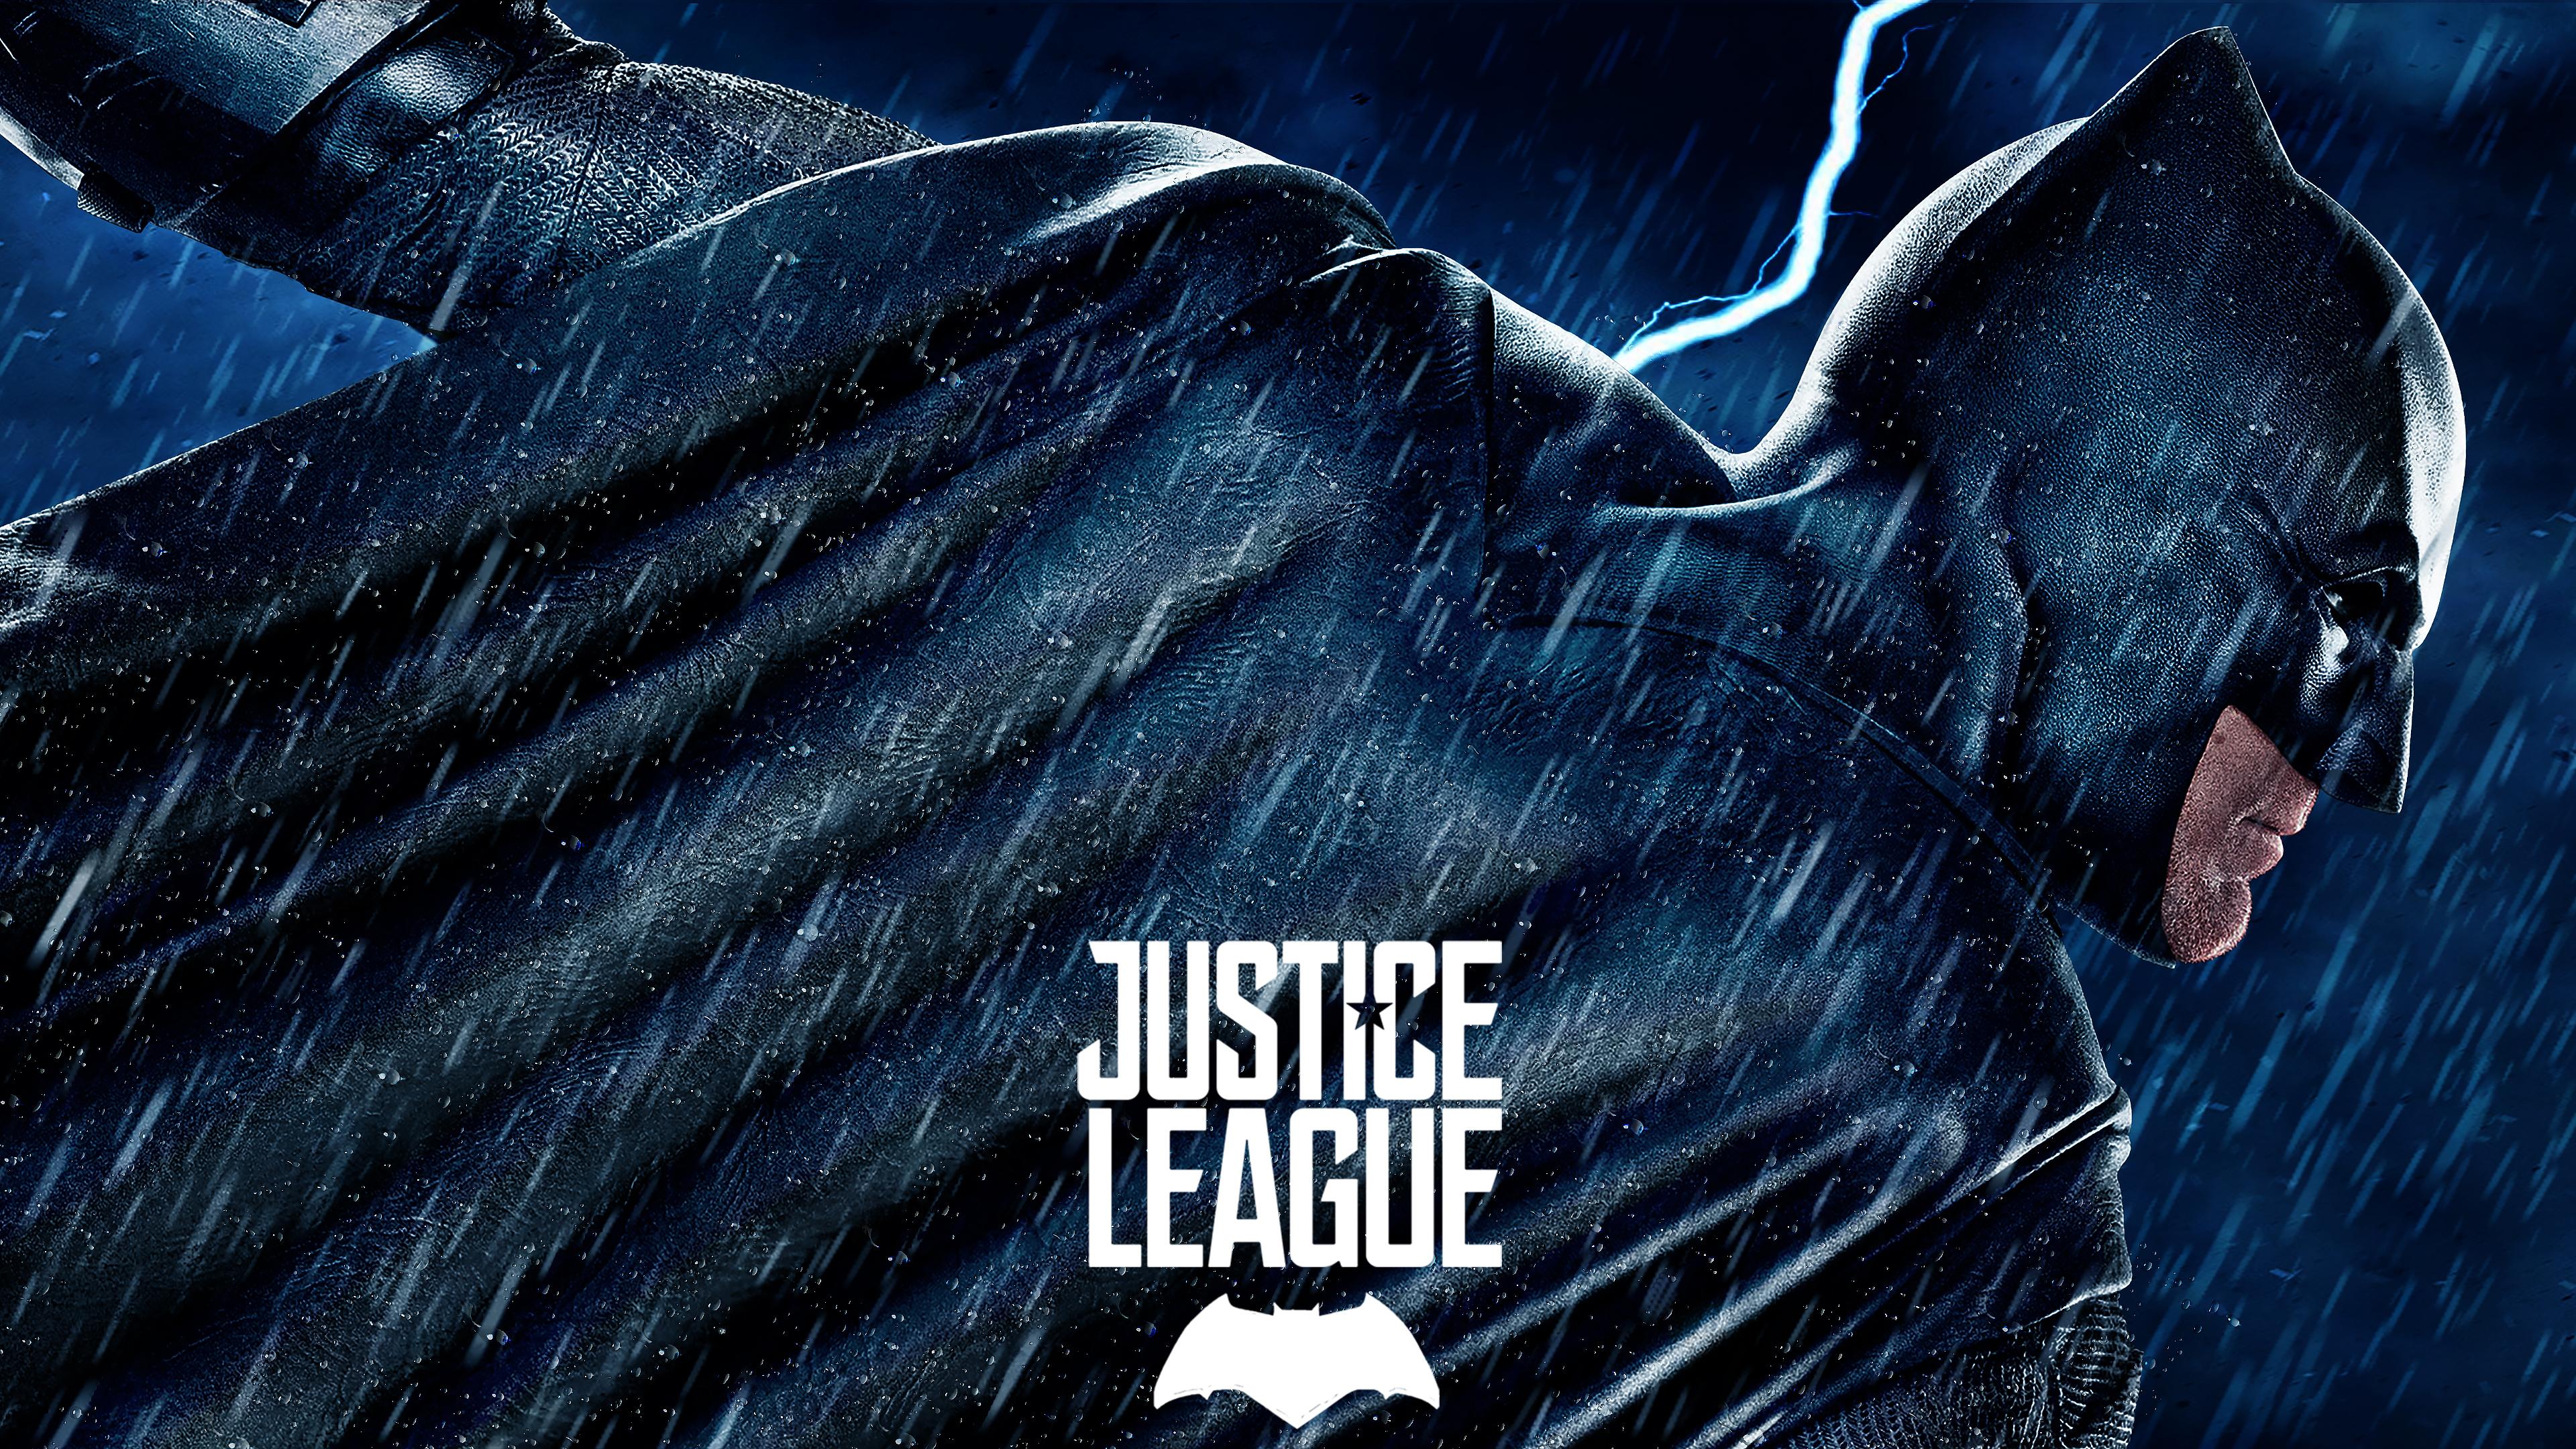 Batman Justice League Poster 2017 Wallpaper, HD Movies 4K